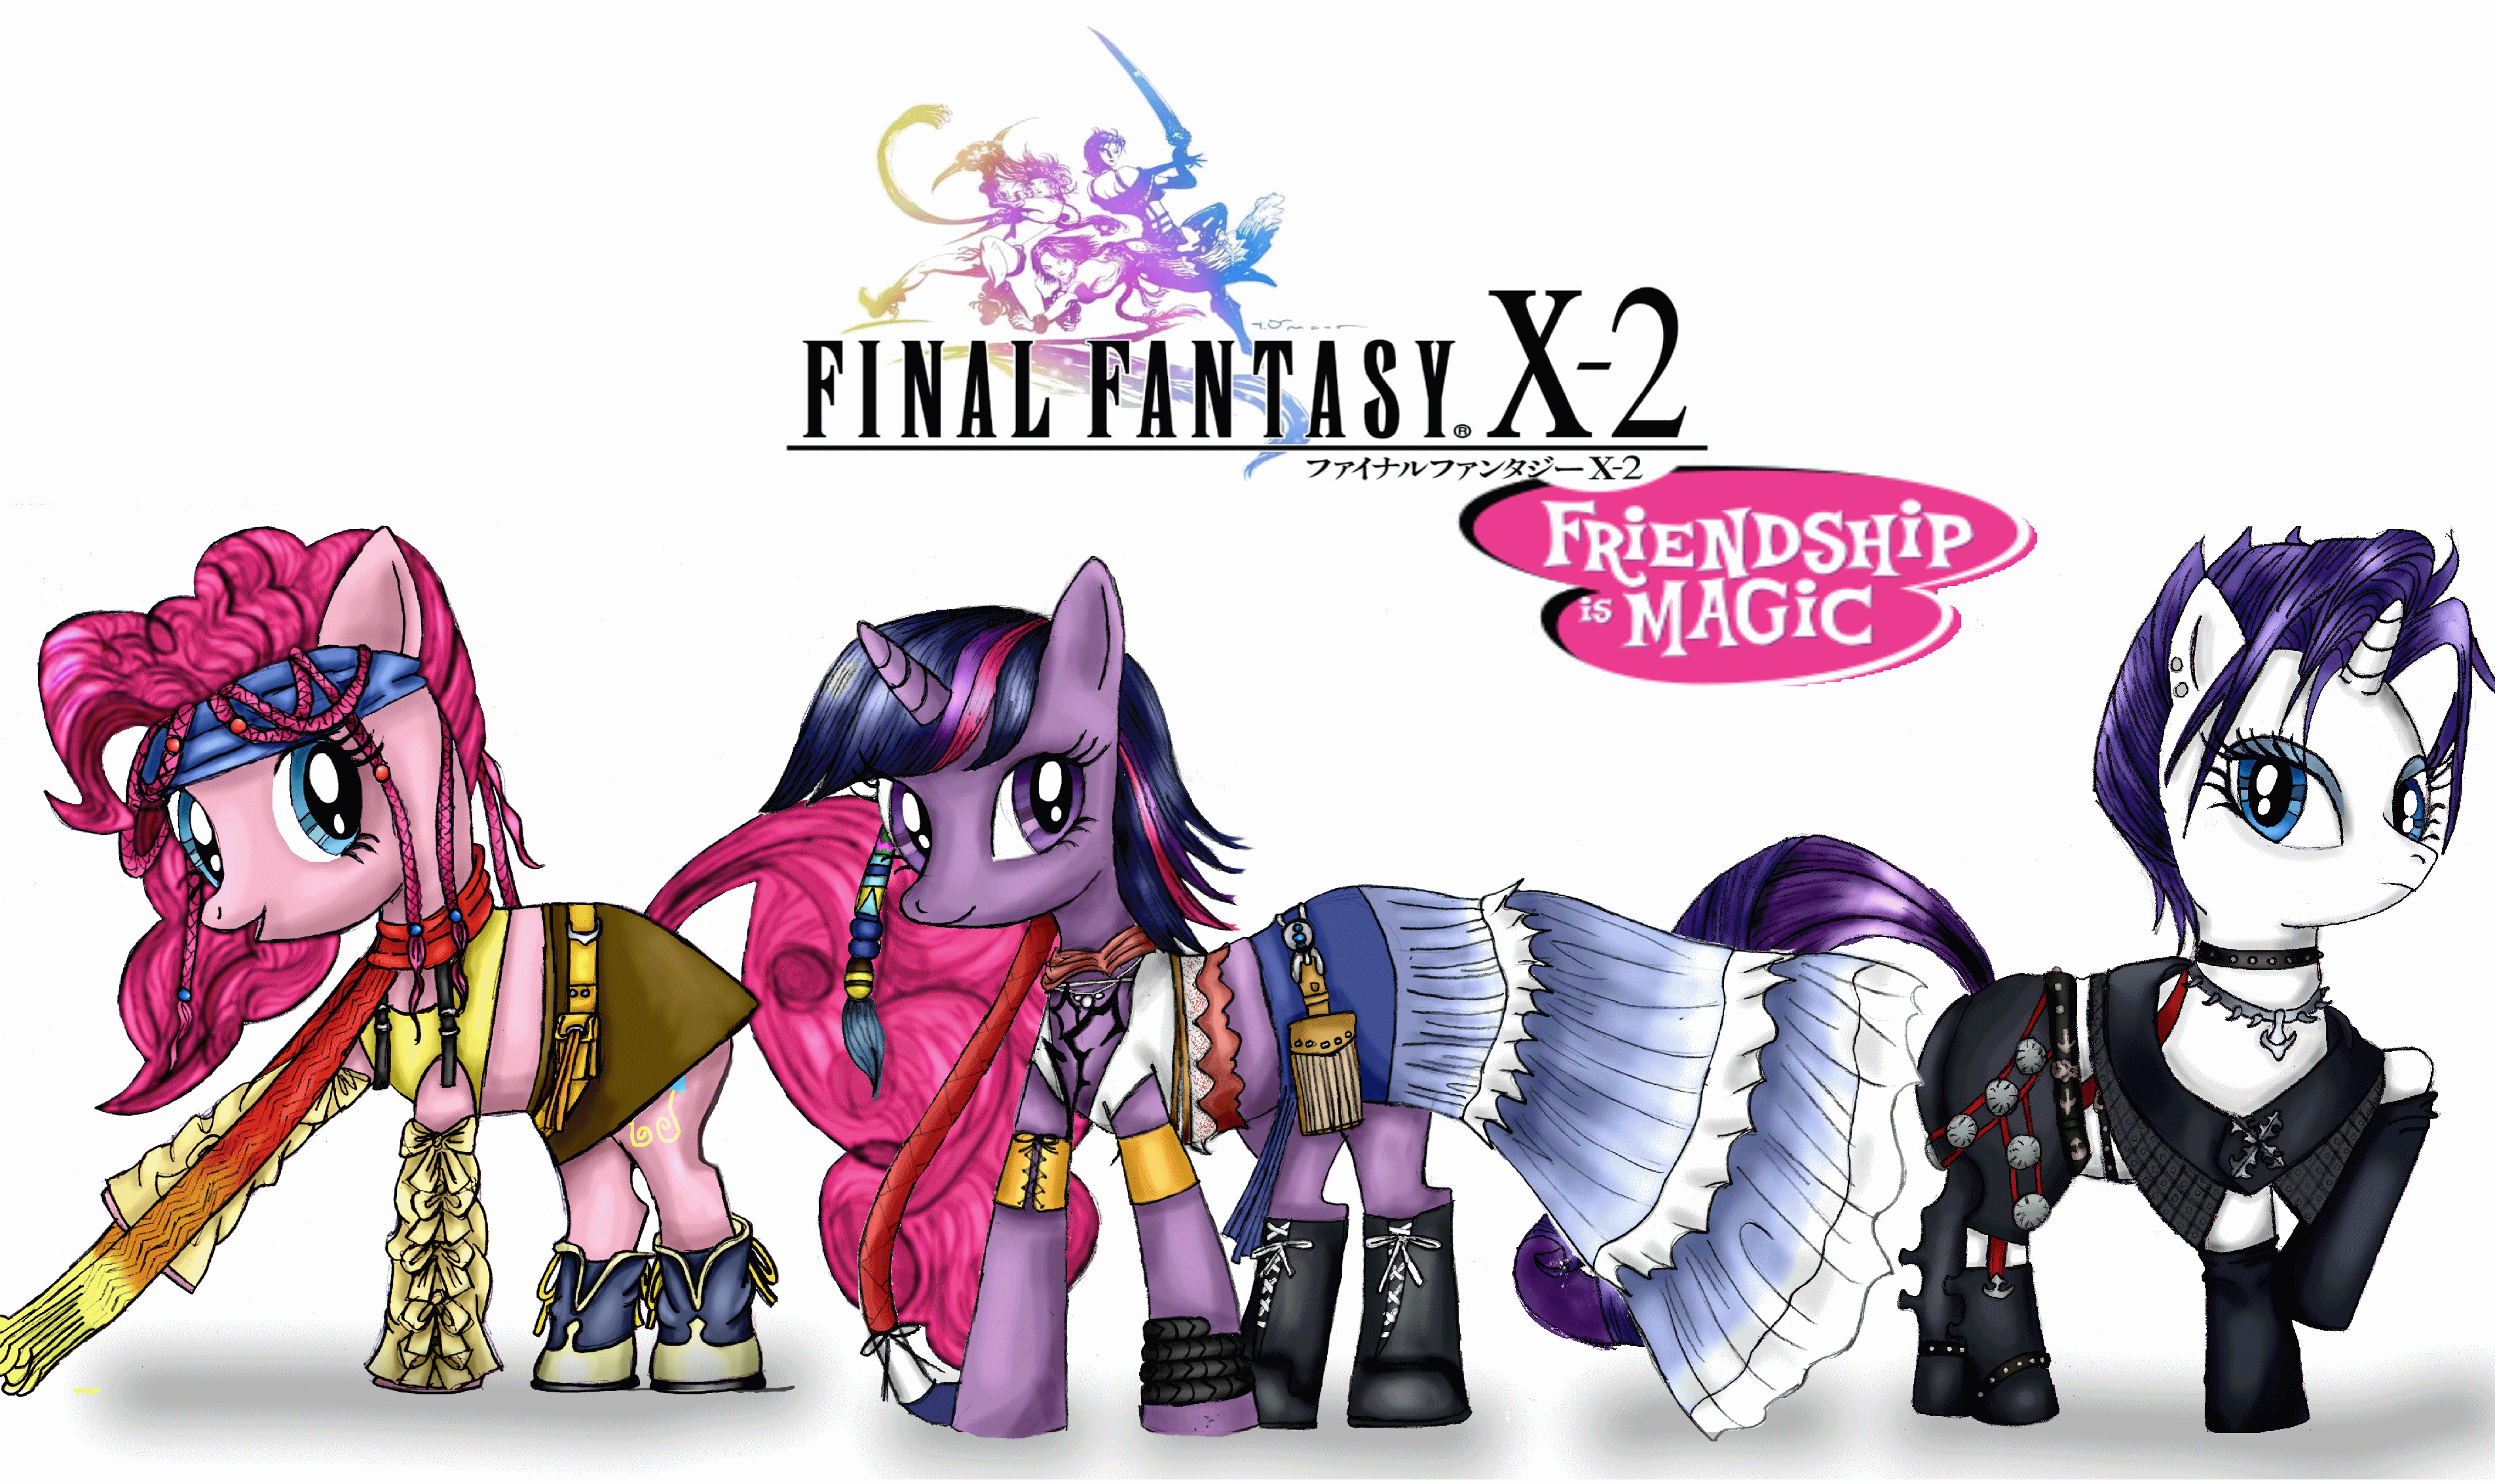 Final Fantasy X-2 on FinalFantasyLuvers - DeviantArt